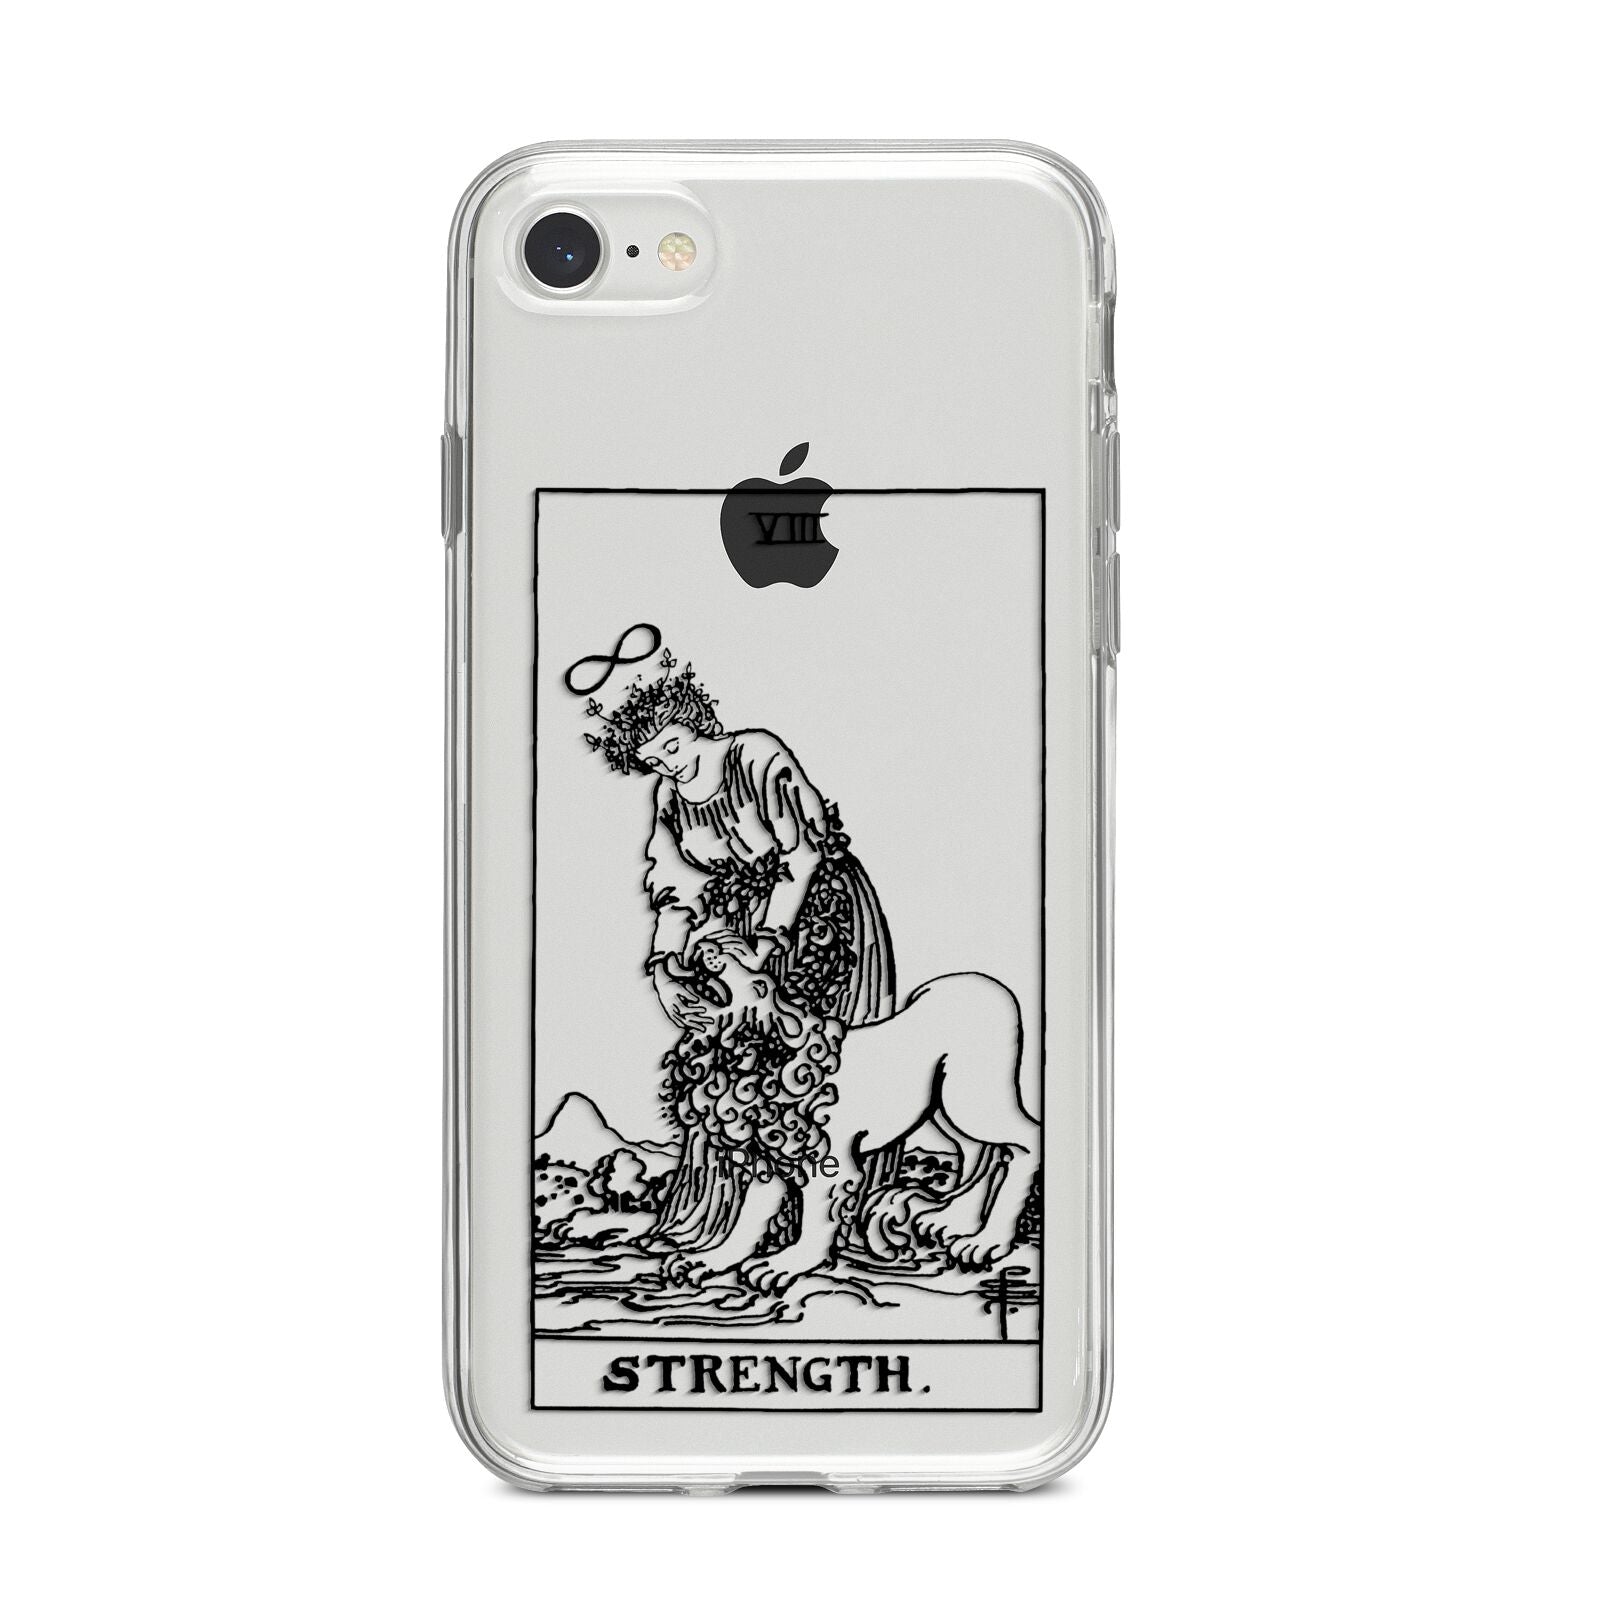 Strength Monochrome Tarot Card iPhone 8 Bumper Case on Silver iPhone